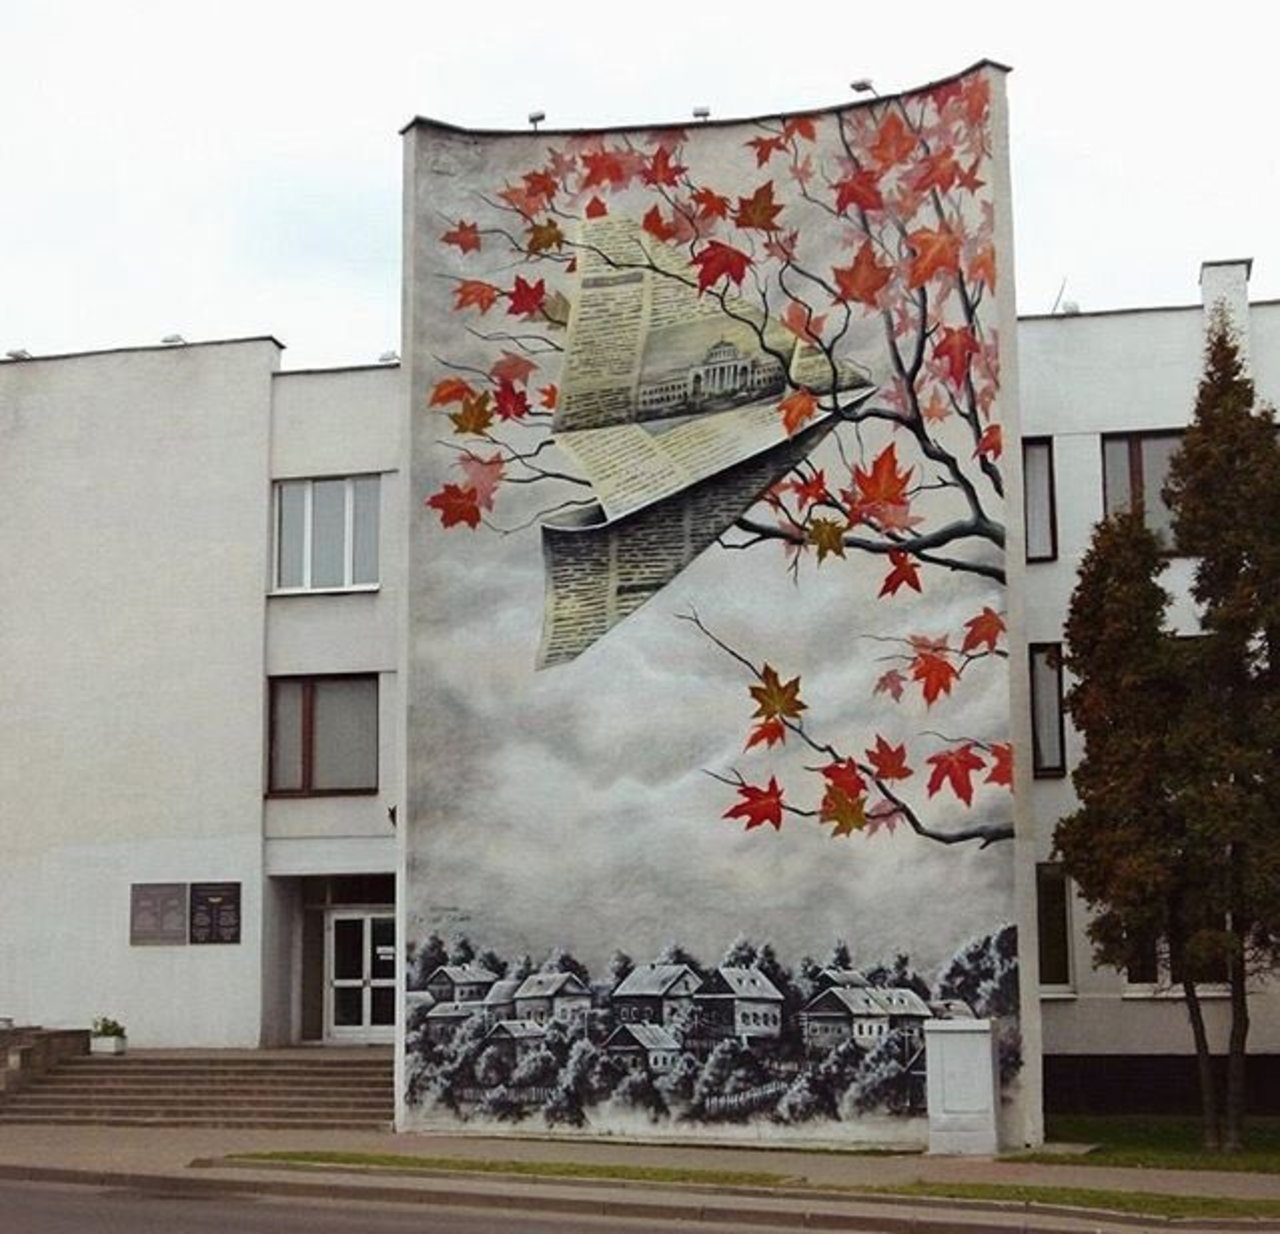 New Street Art by MUTUS in Belarus 

#art #graffiti #mural #streetart https://t.co/X0swDq21Iv